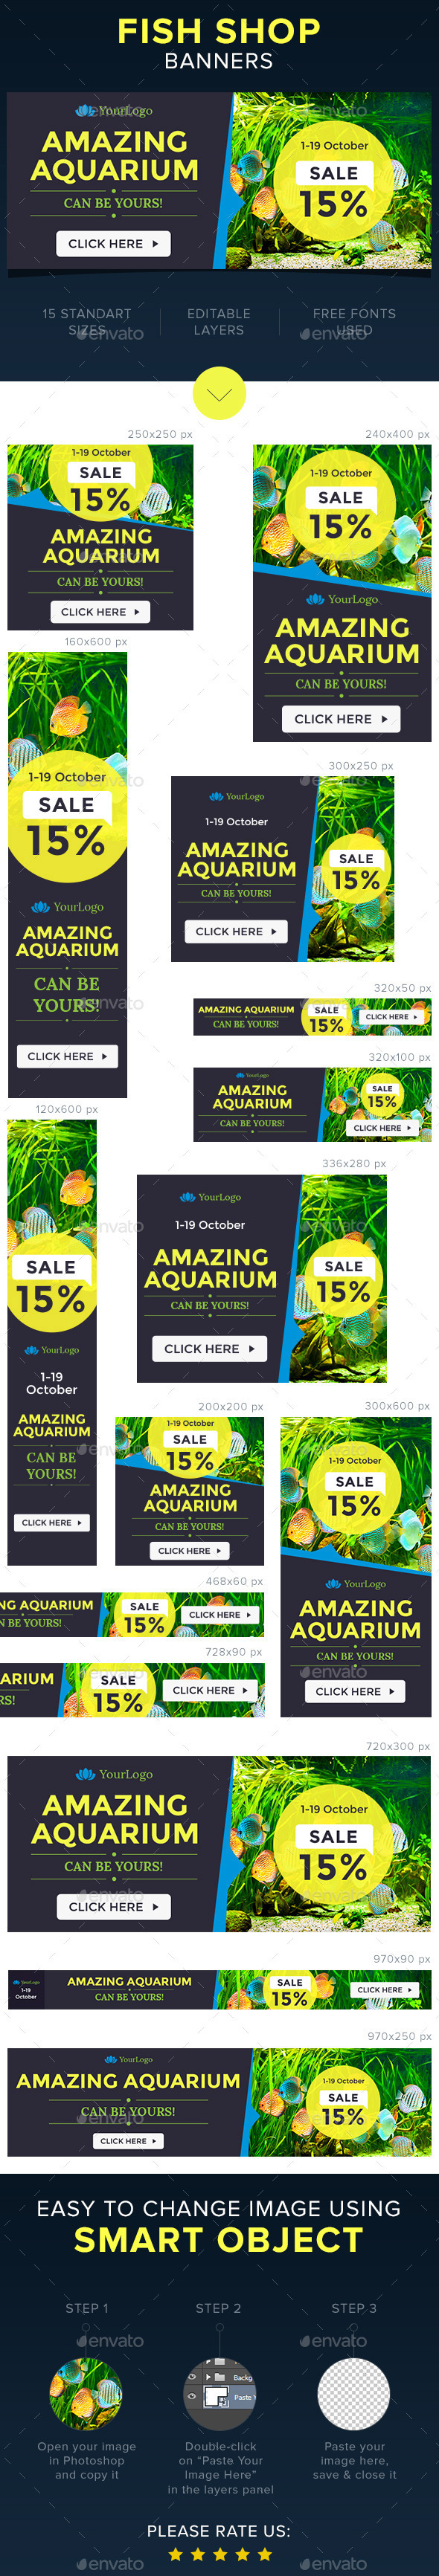 envato graphicriver Web Banners ad banners fish shop pets store sale